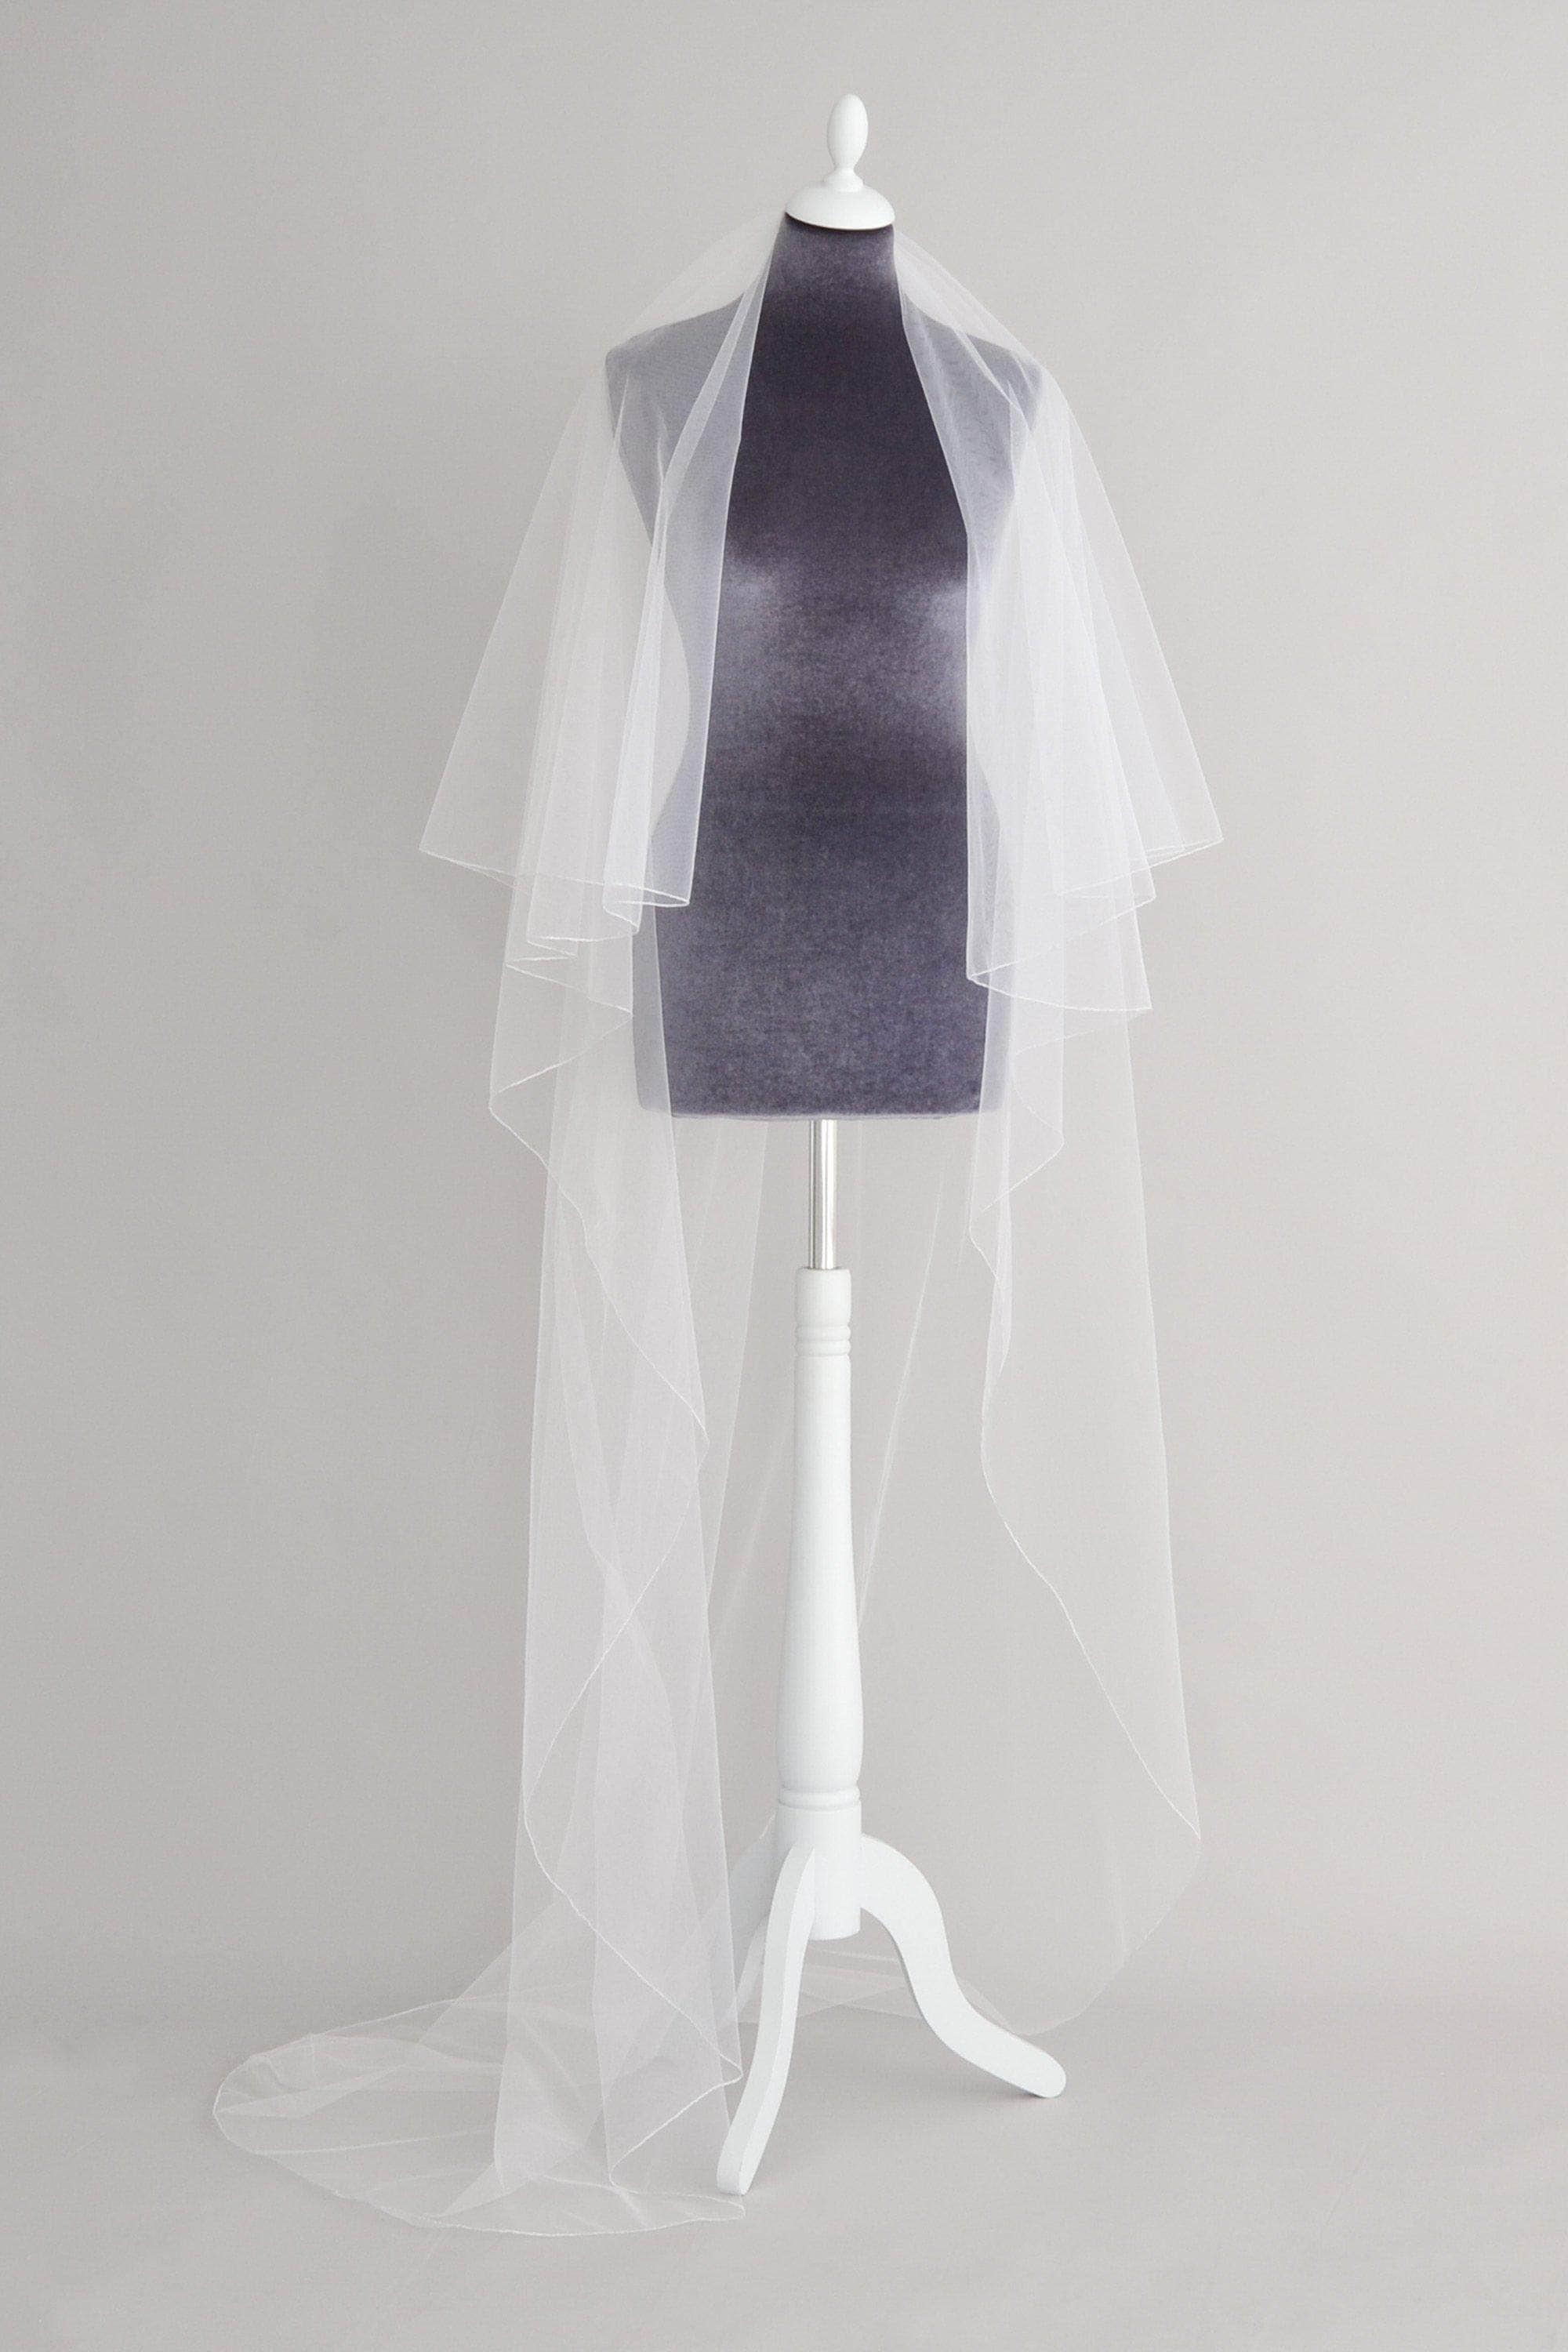 Wedding Veil white / Silver / Floor length (72cm + 200cm/28 inches + 79 inches) White Floor Length Pencil edge (silver) two tier wedding veil - 'Ariel'